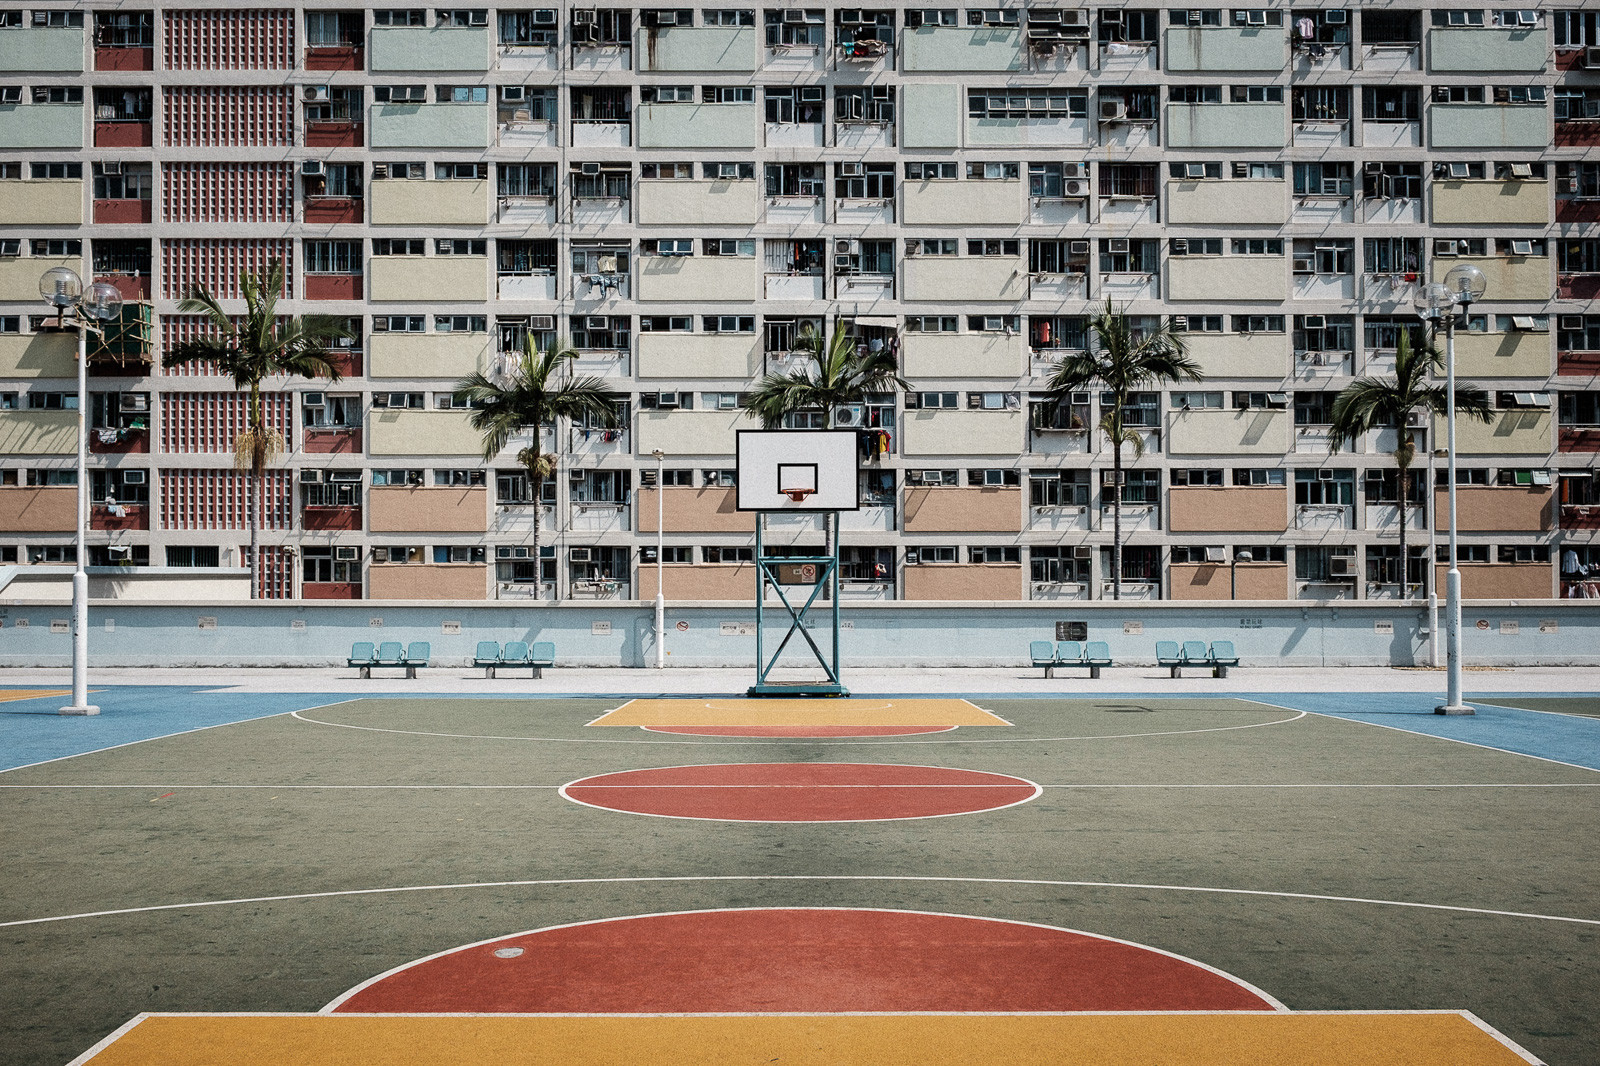 colorful basketball court in hong kong choi hung estate